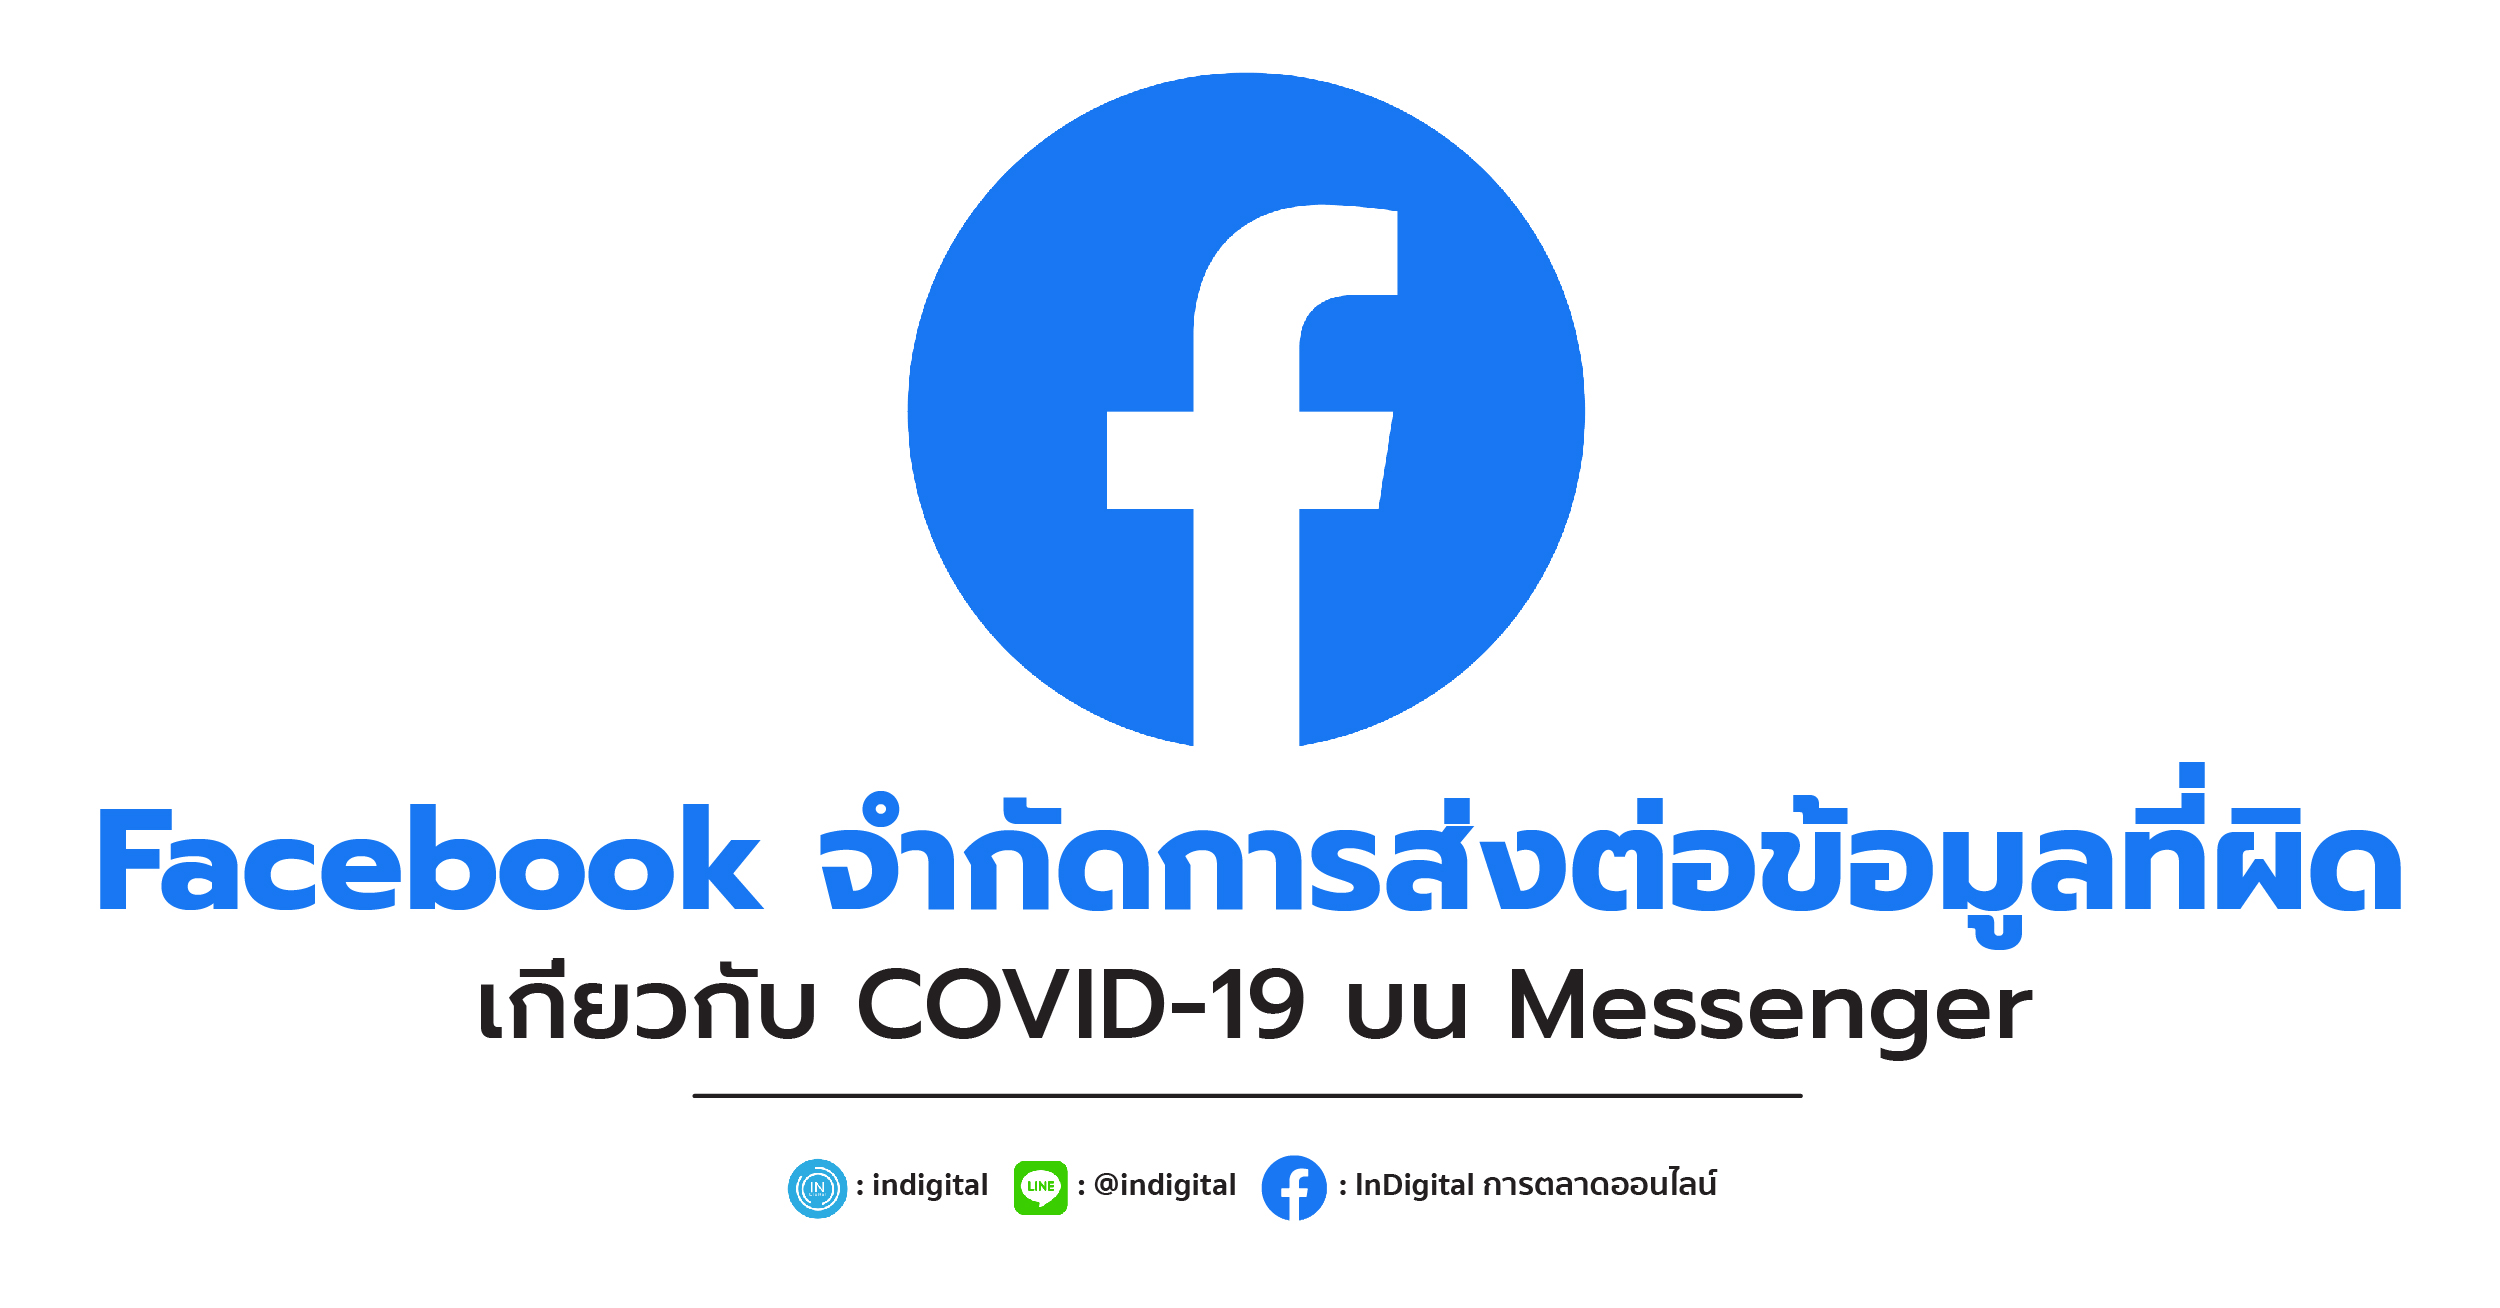 Facebook จำกัดการส่งต่อข้อมูลที่ผิดเกี่ยวกับ COVID-19 บน Messenger